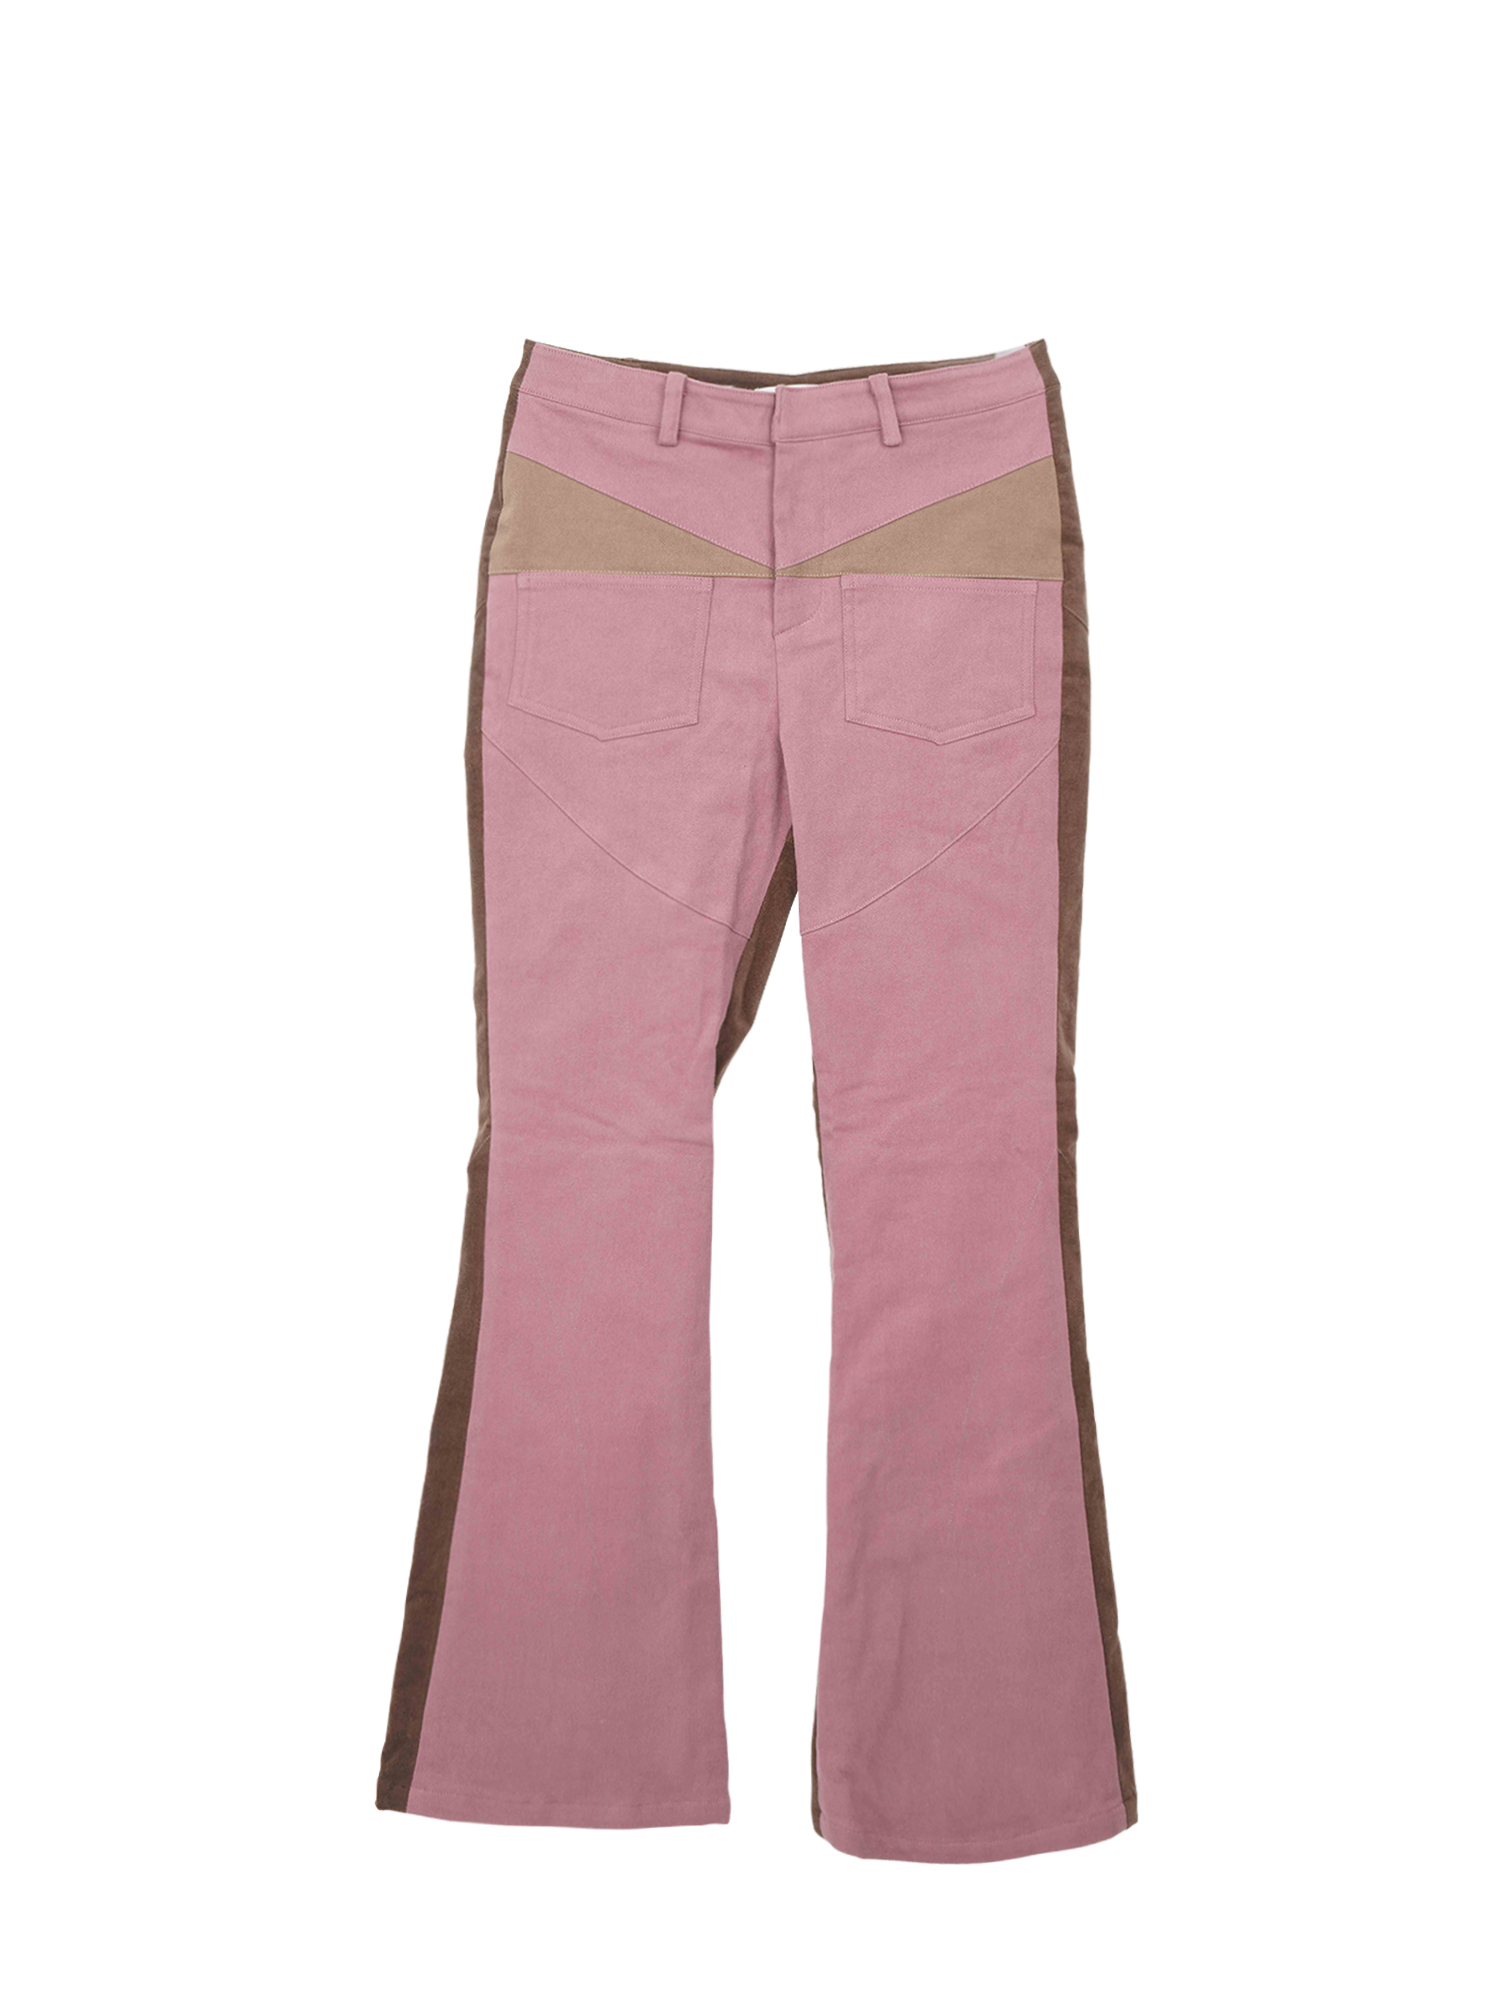 Cotton Velvet Contrast Pants - Pink brown